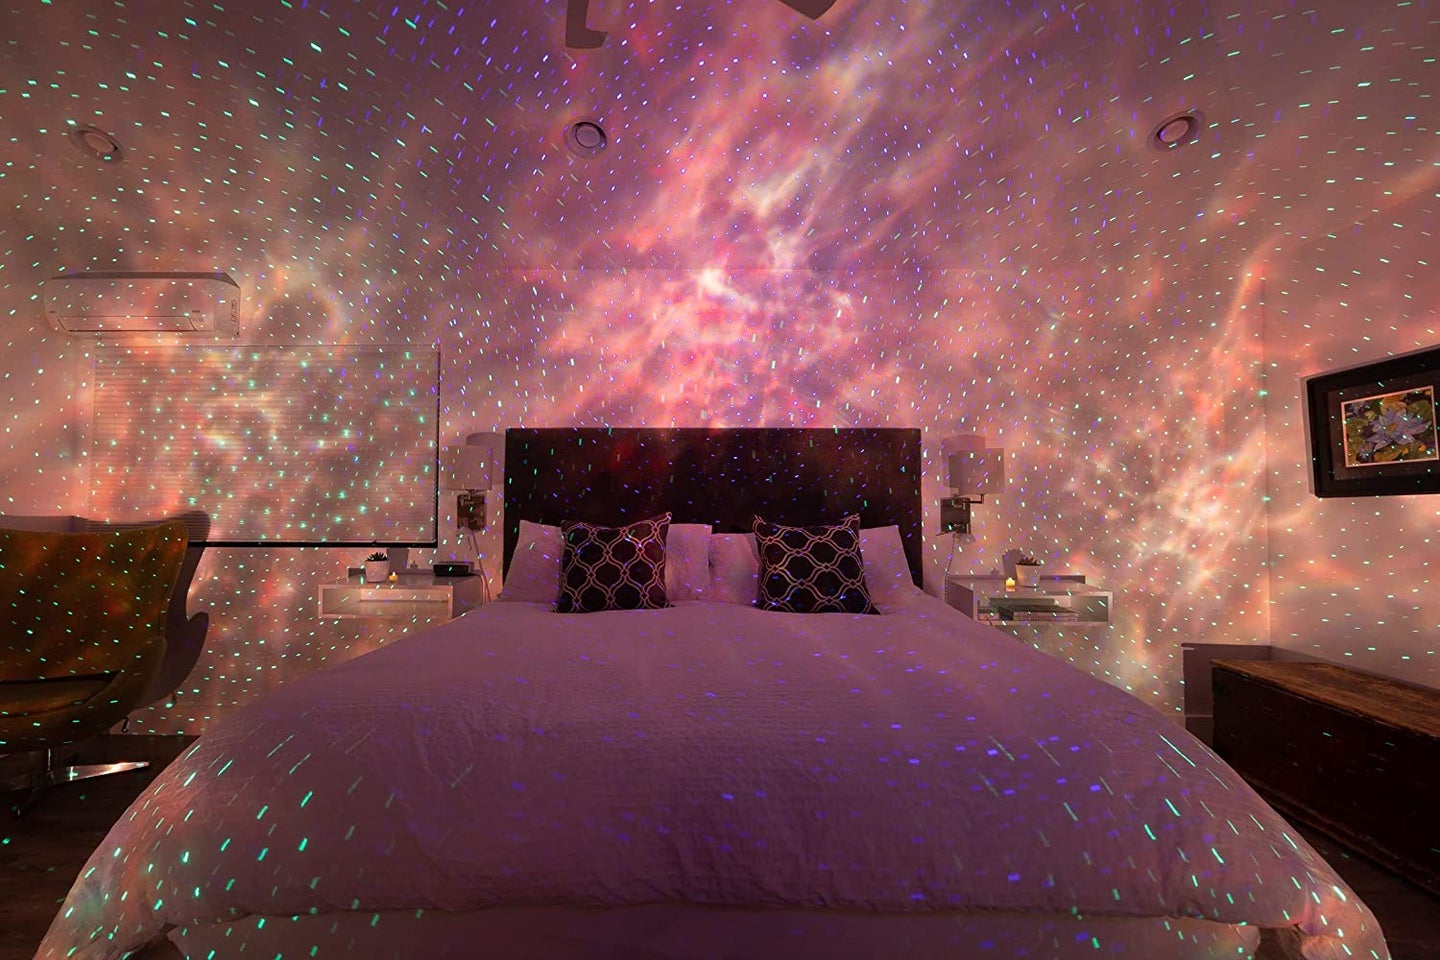 BlissLights nebula lamp bedroom lifestyle image